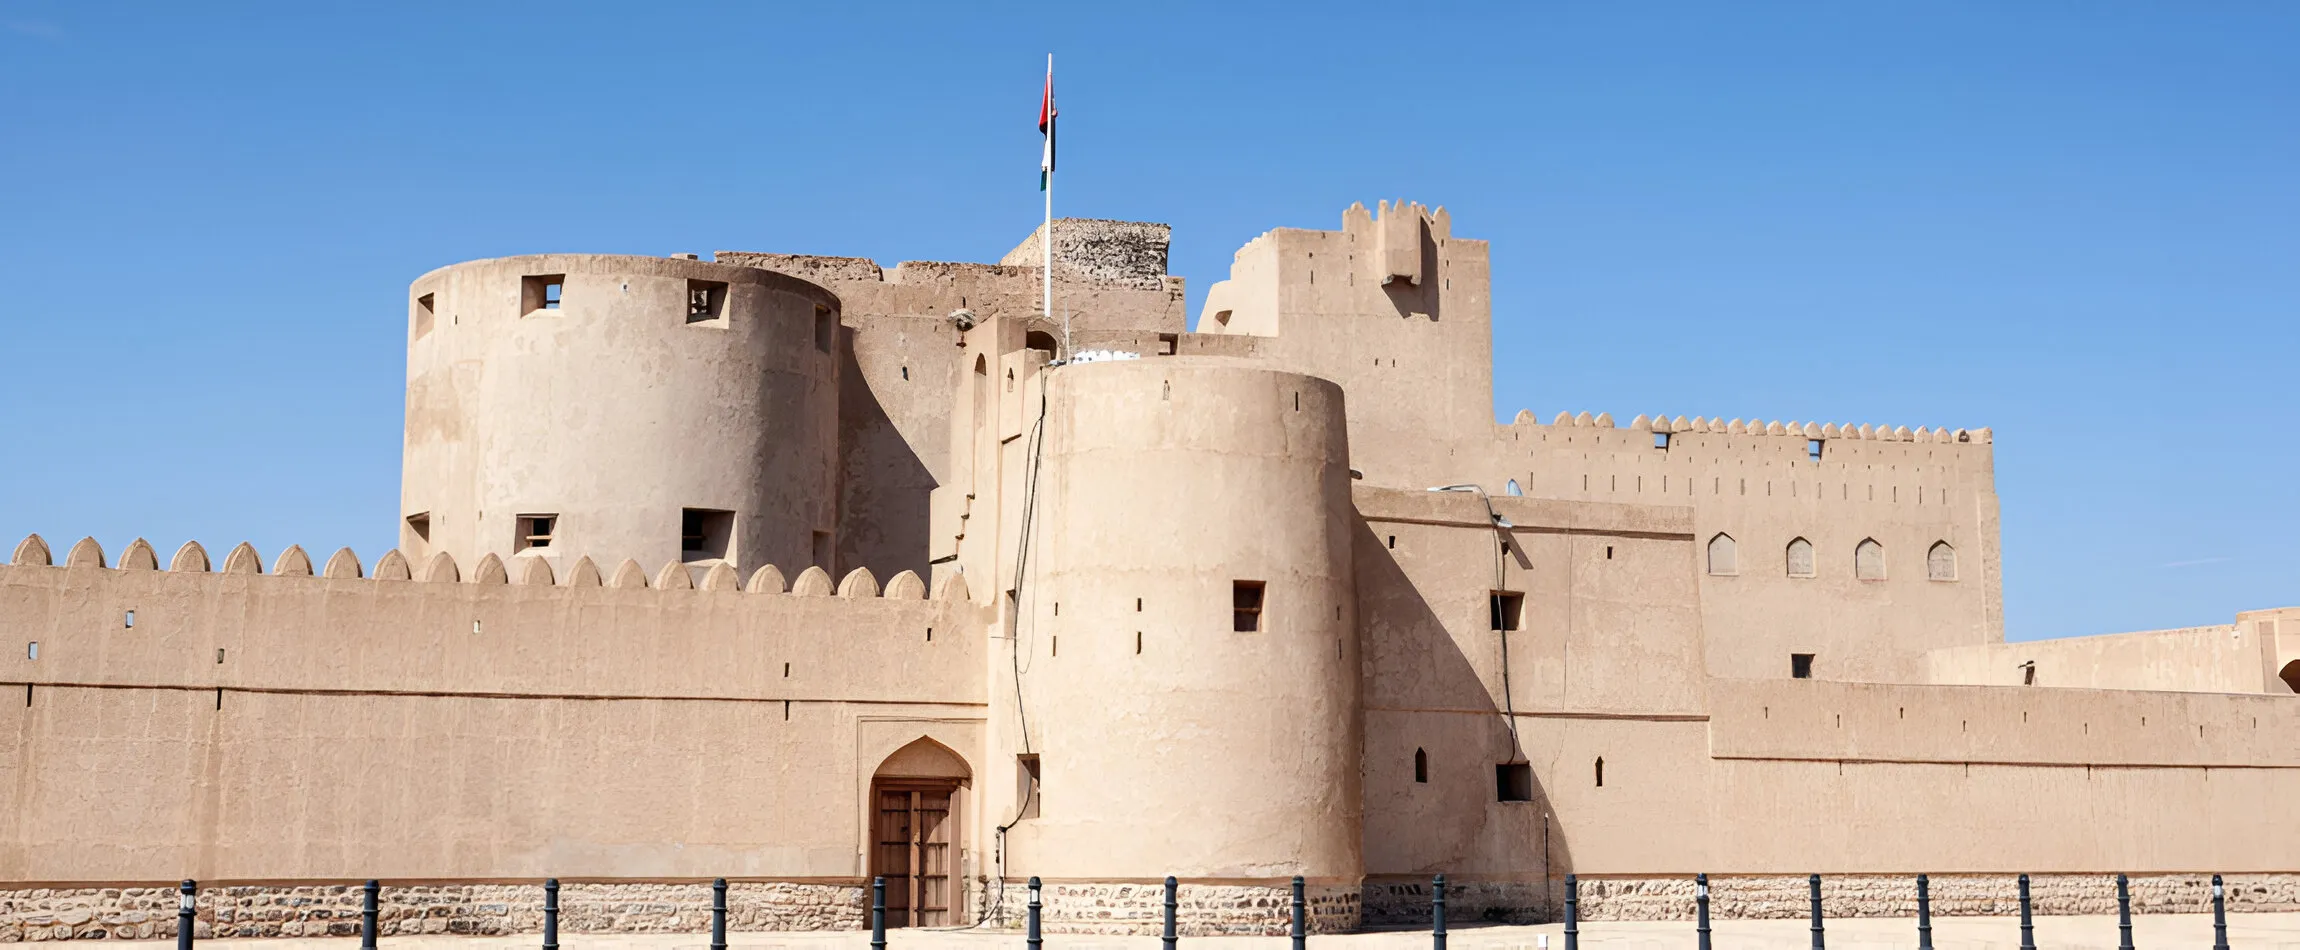 Jabrin-castle-a-masterpiece -Attractions in Oman